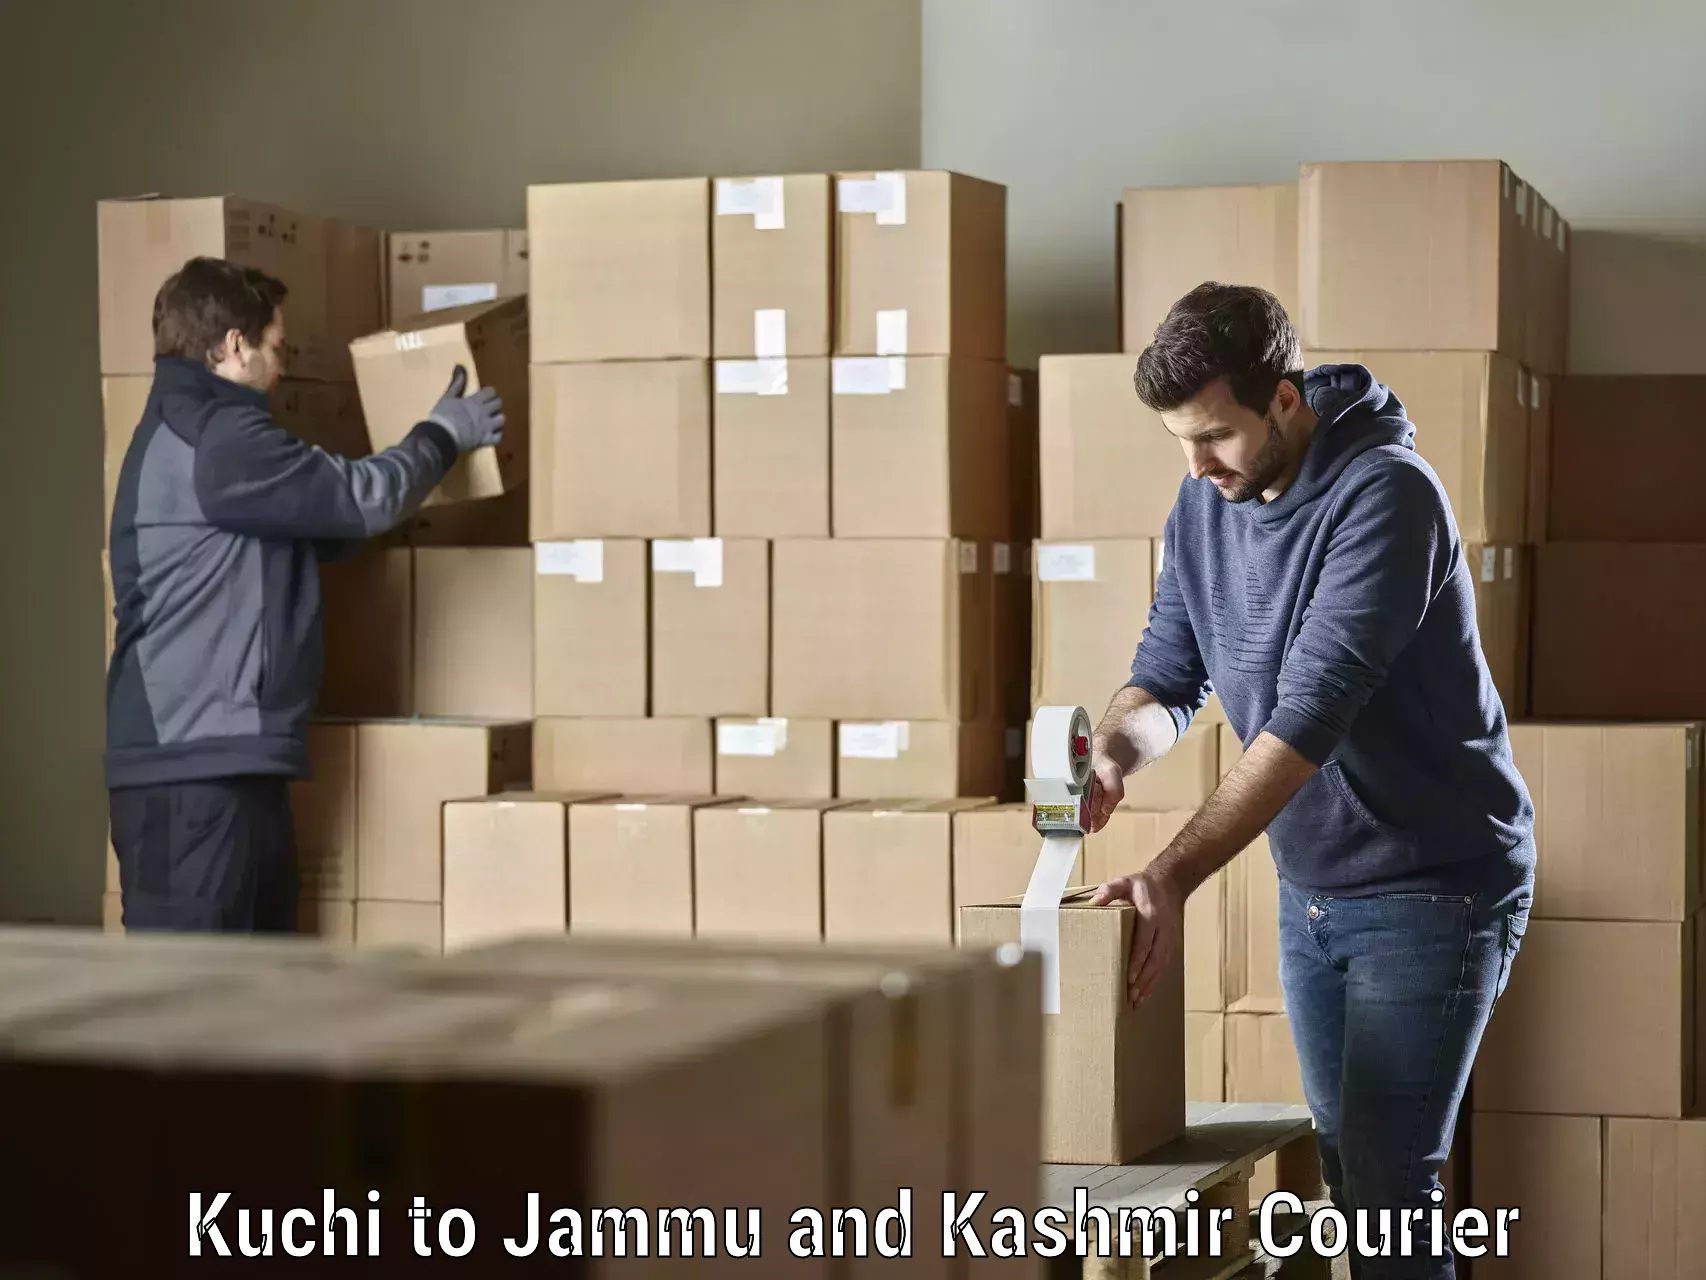 Courier service comparison Kuchi to Jammu and Kashmir